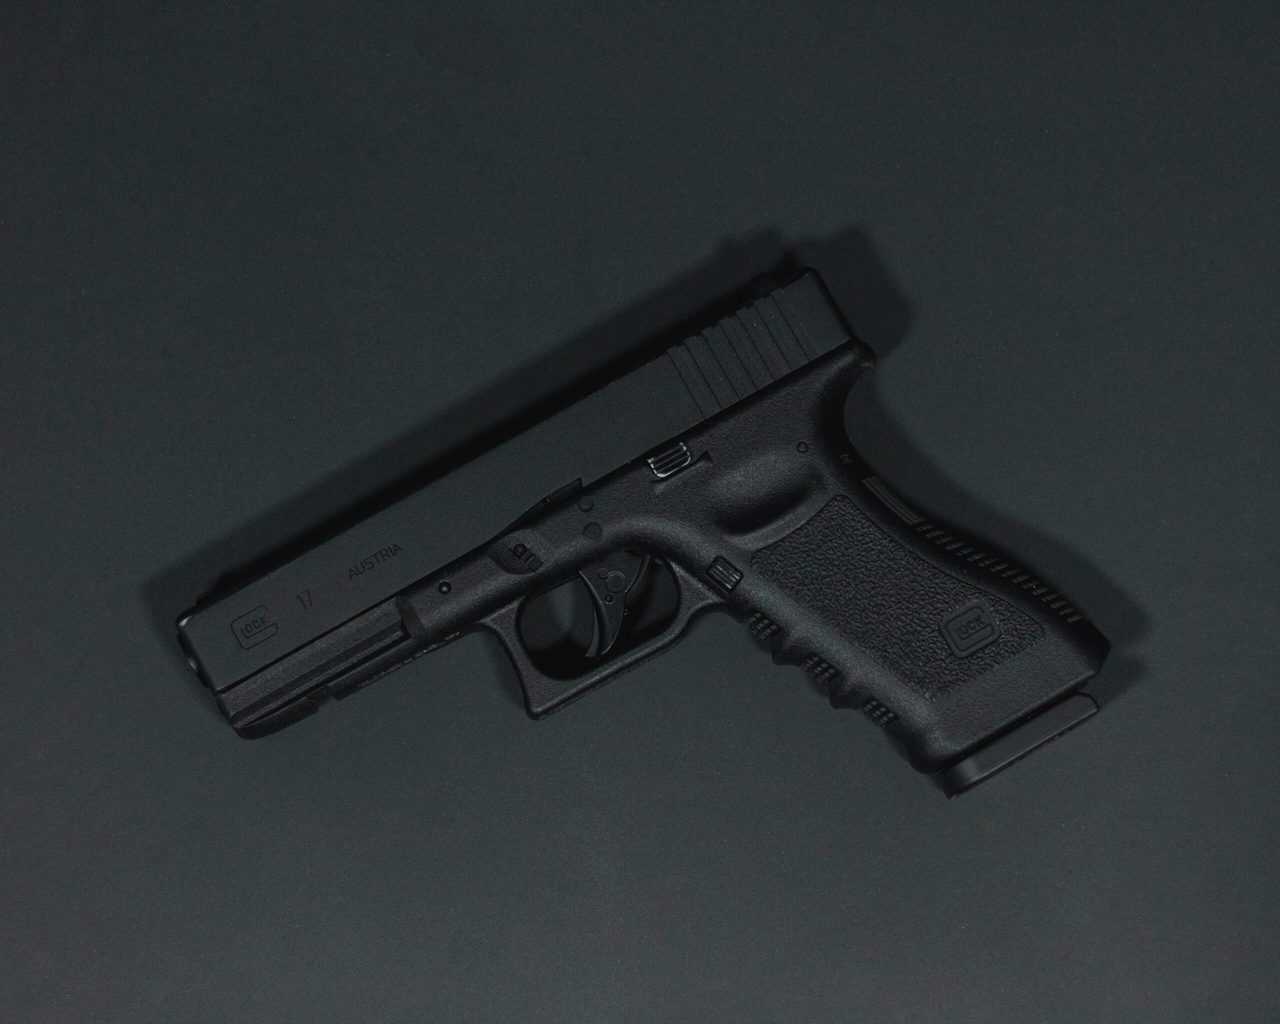 Closeup shot of a handgun on a black table